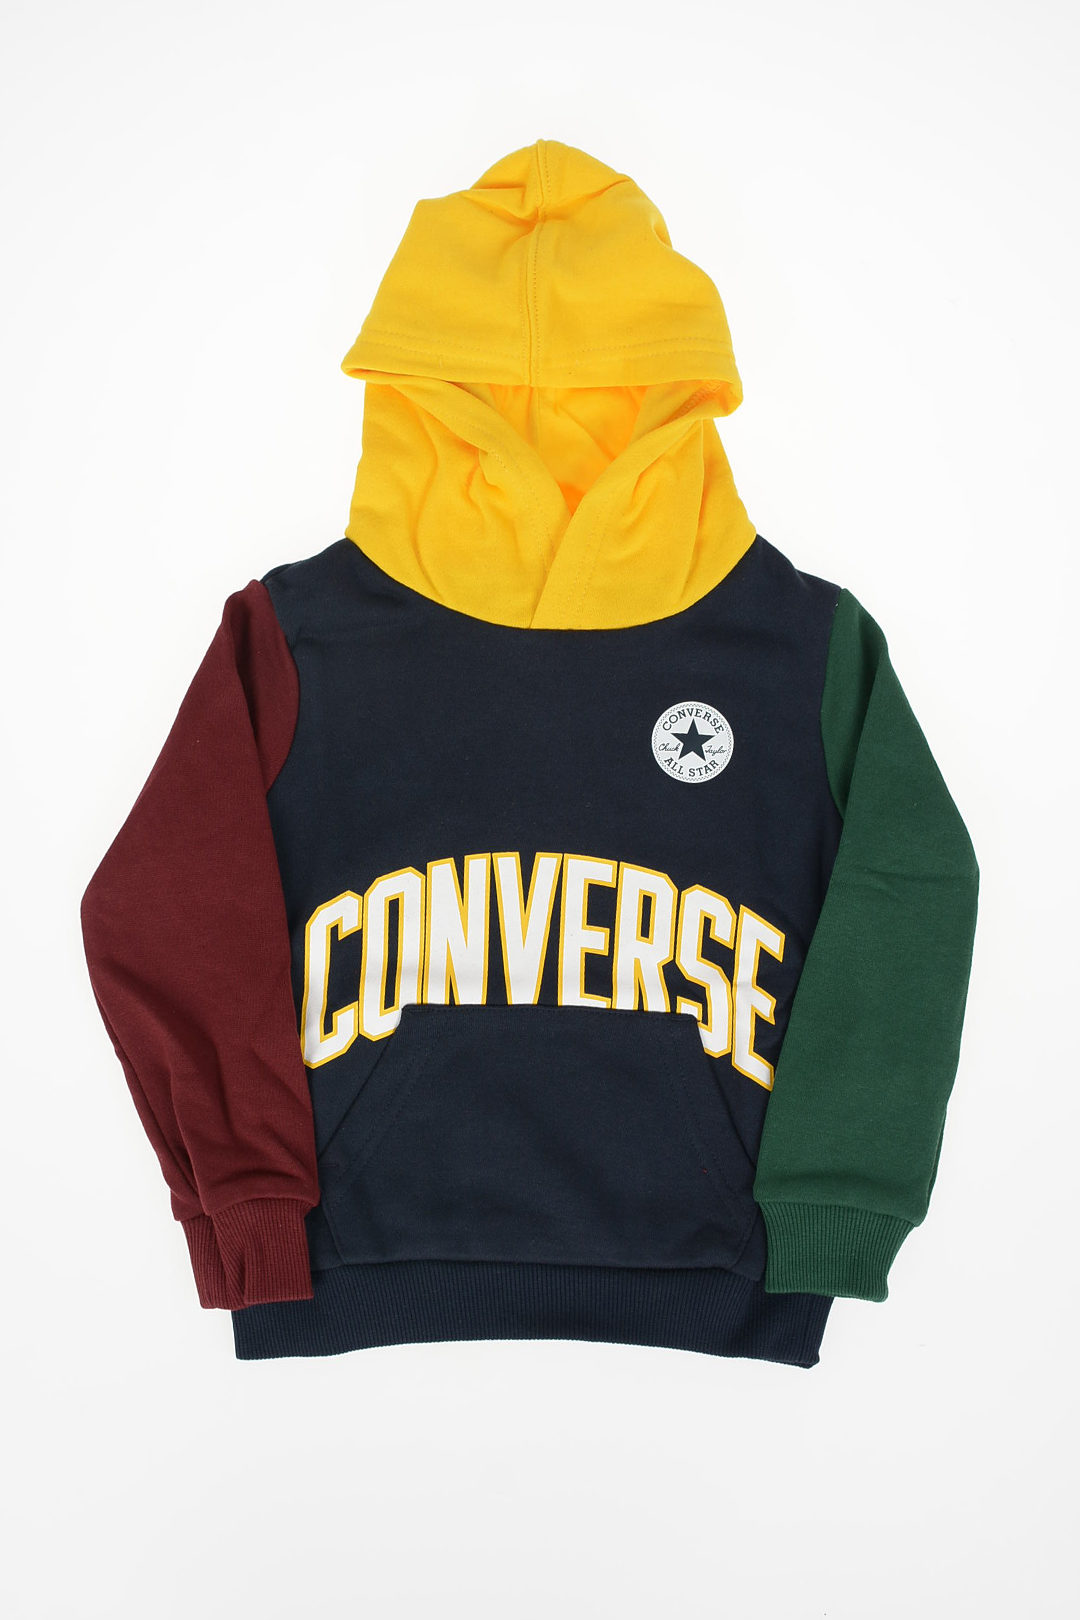 Converse KIDS Hoodie Sweatshirt boys - Glamood Outlet